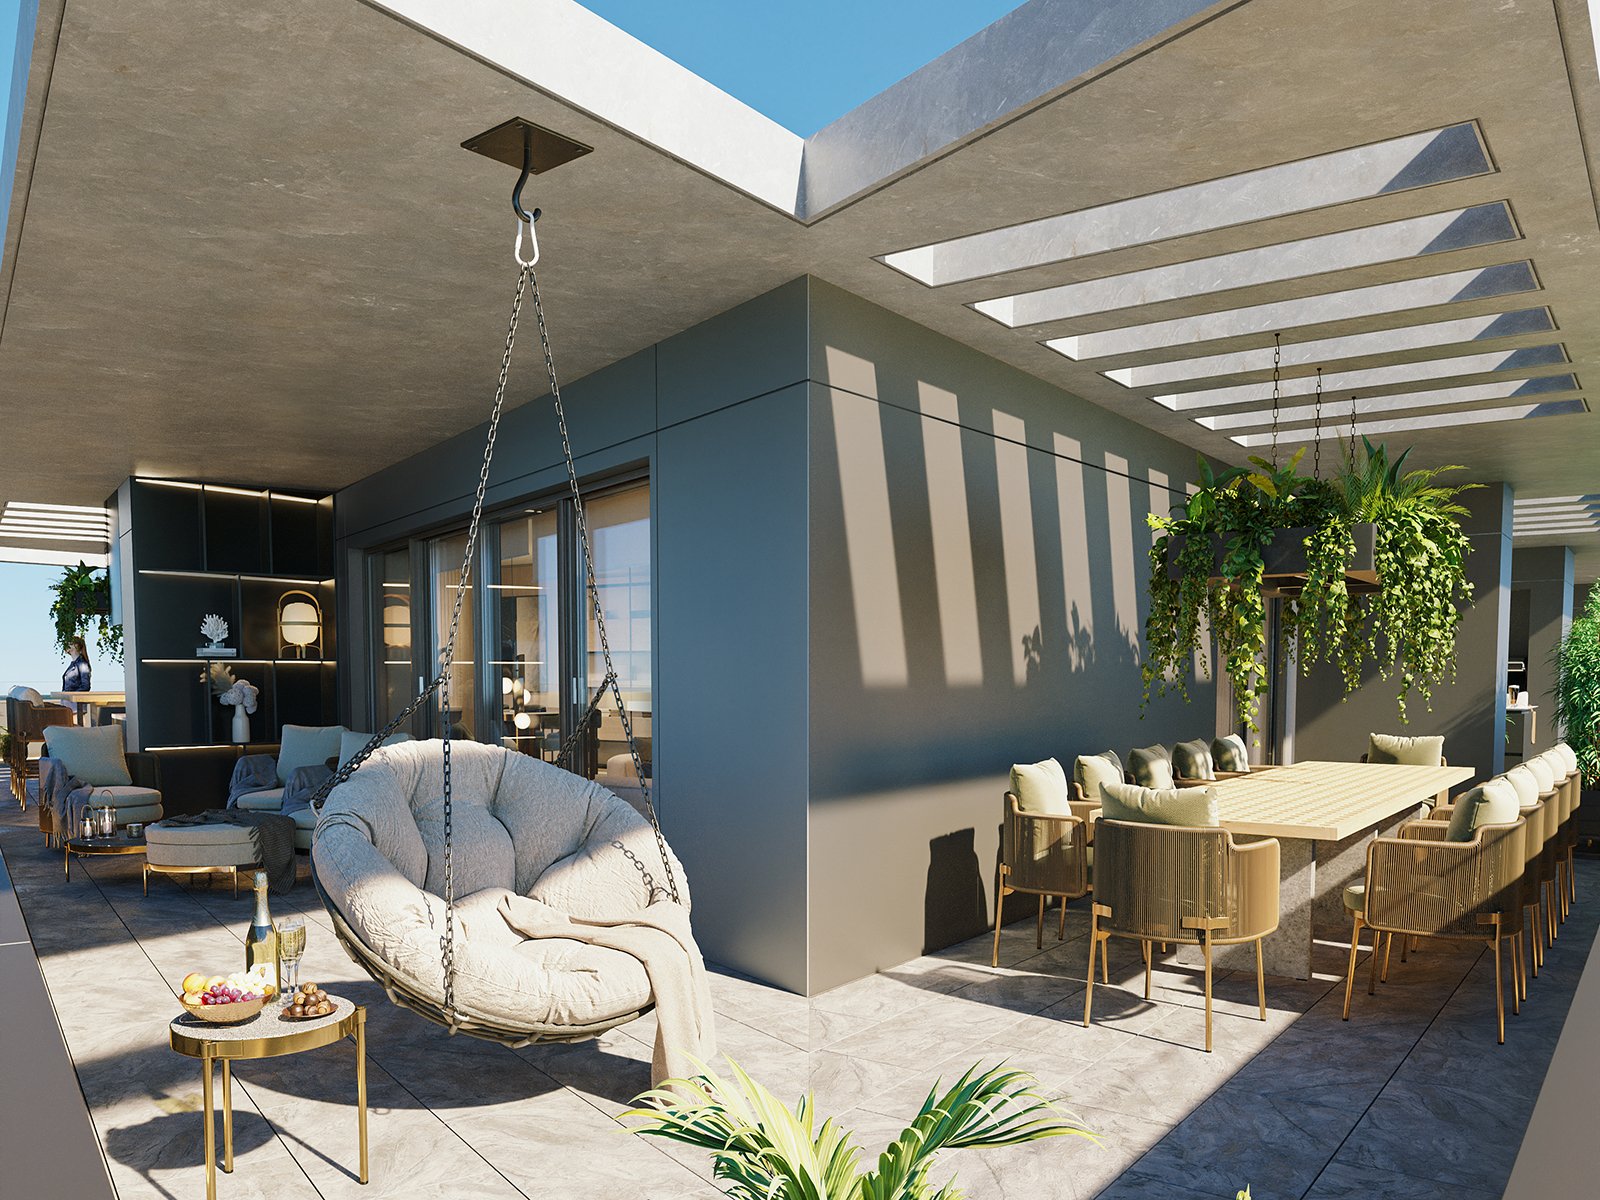 4 bedroom duplex apartment with balcony in new development Matosinhos 607345087